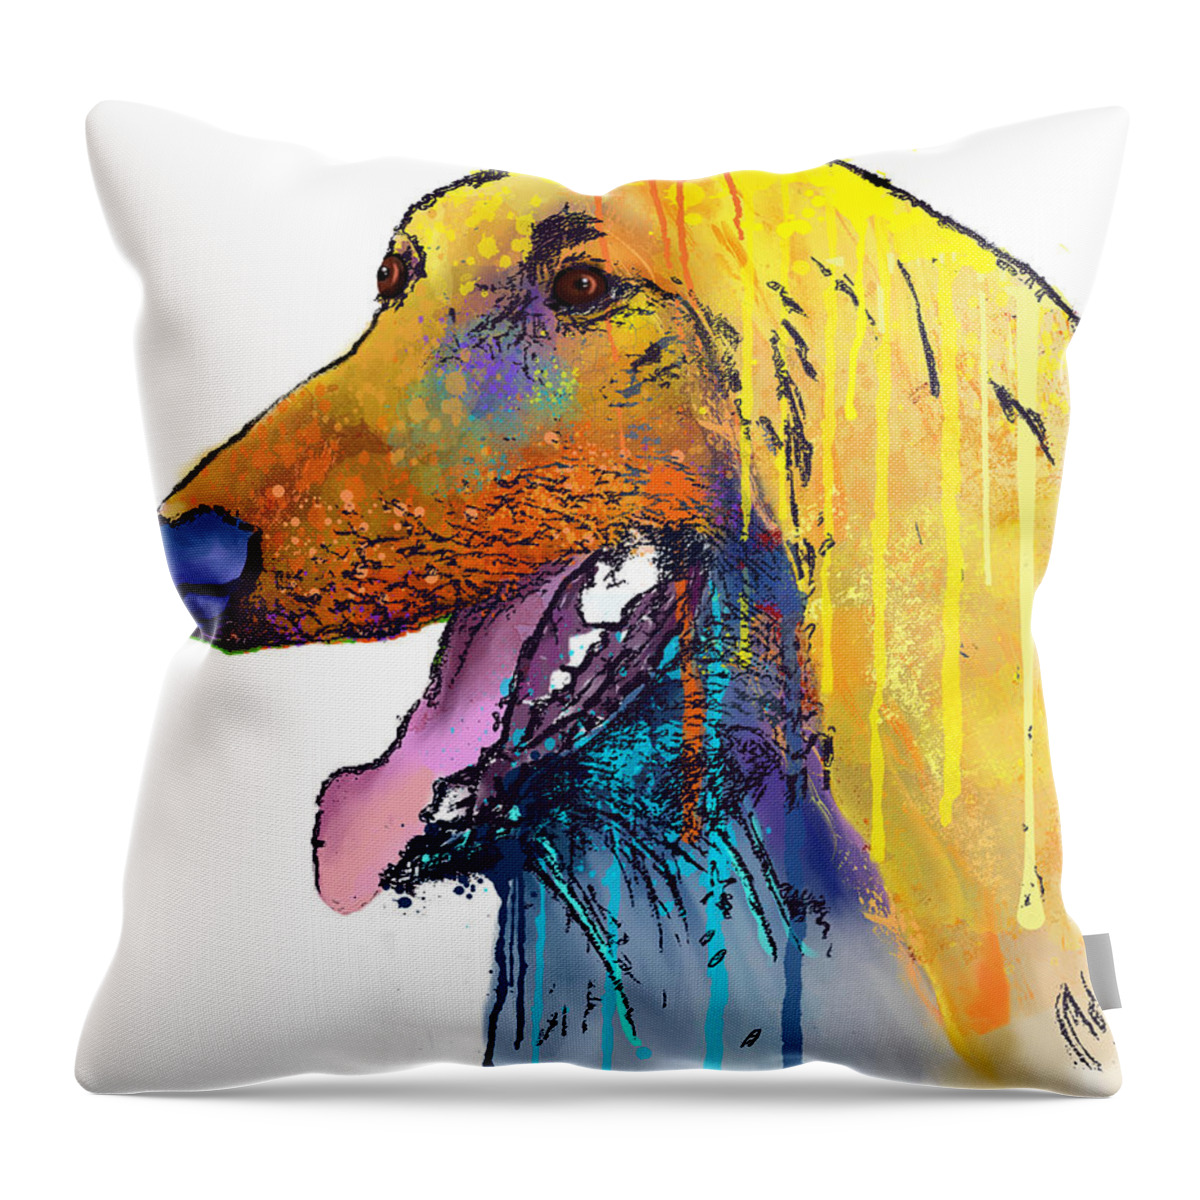 Afghan Hound Throw Pillow featuring the digital art Afghan Hound #1 by Marlene Watson